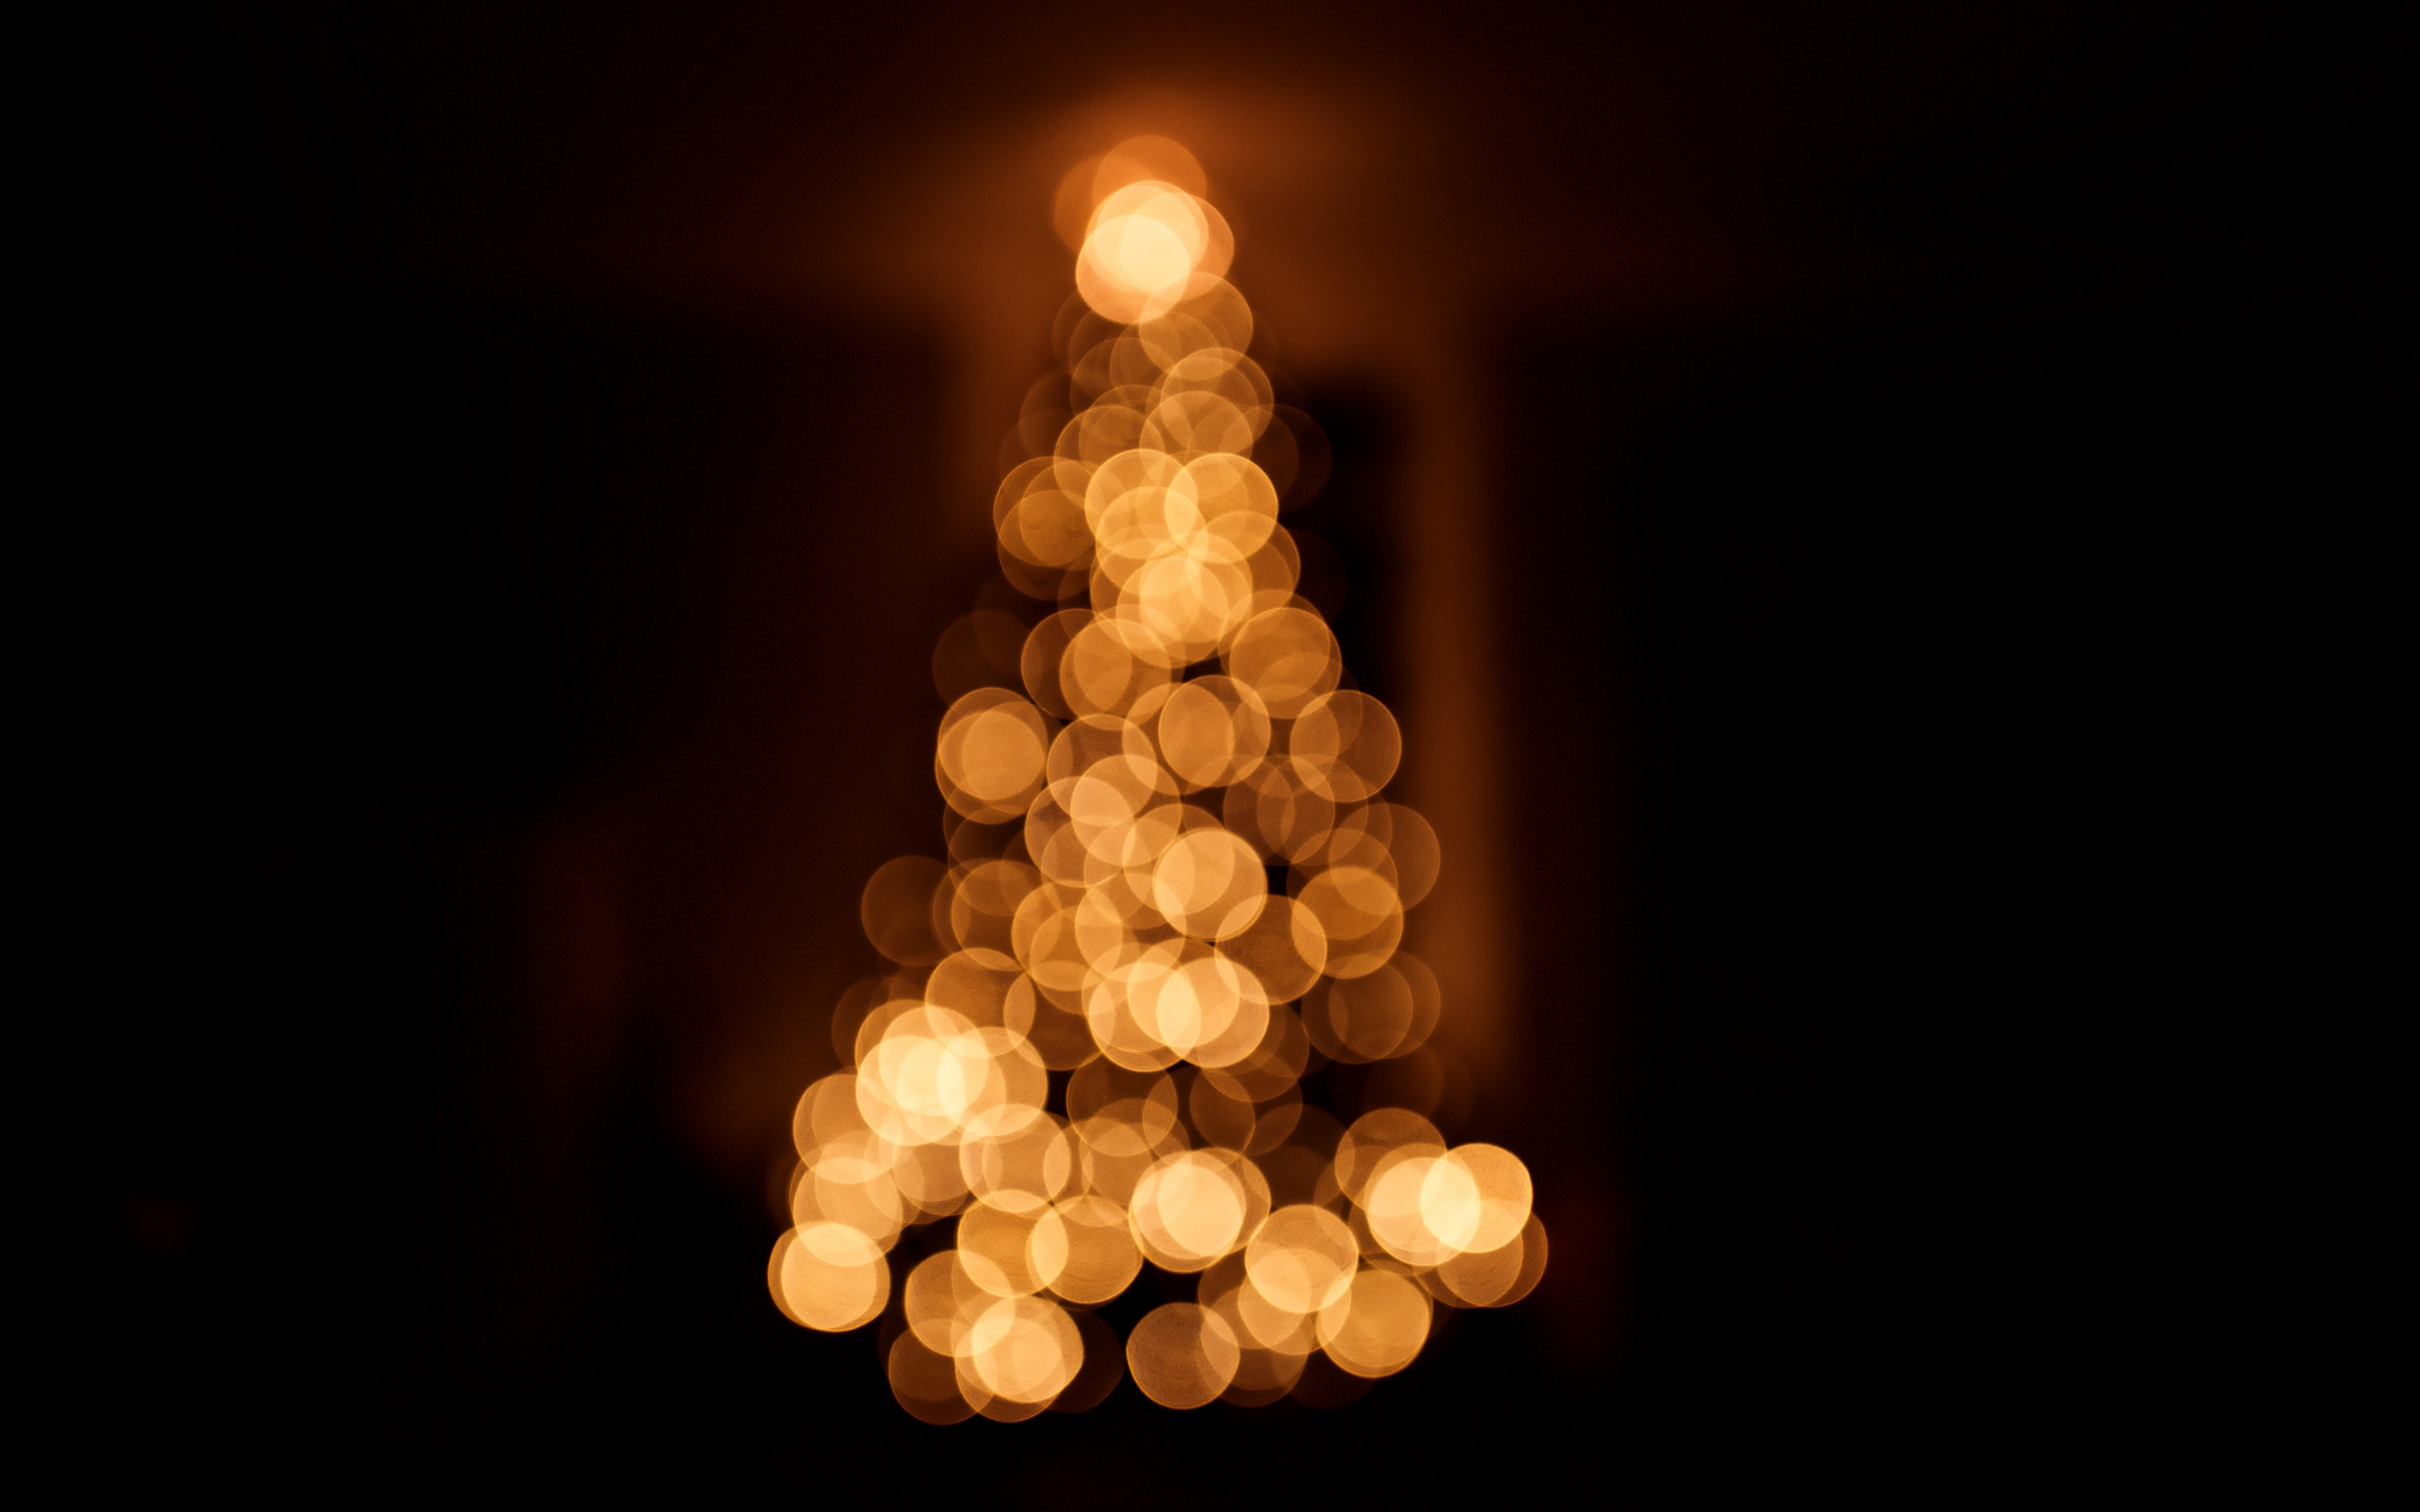 Download wallpaper: Bokeh Christmas tree 2880x1800